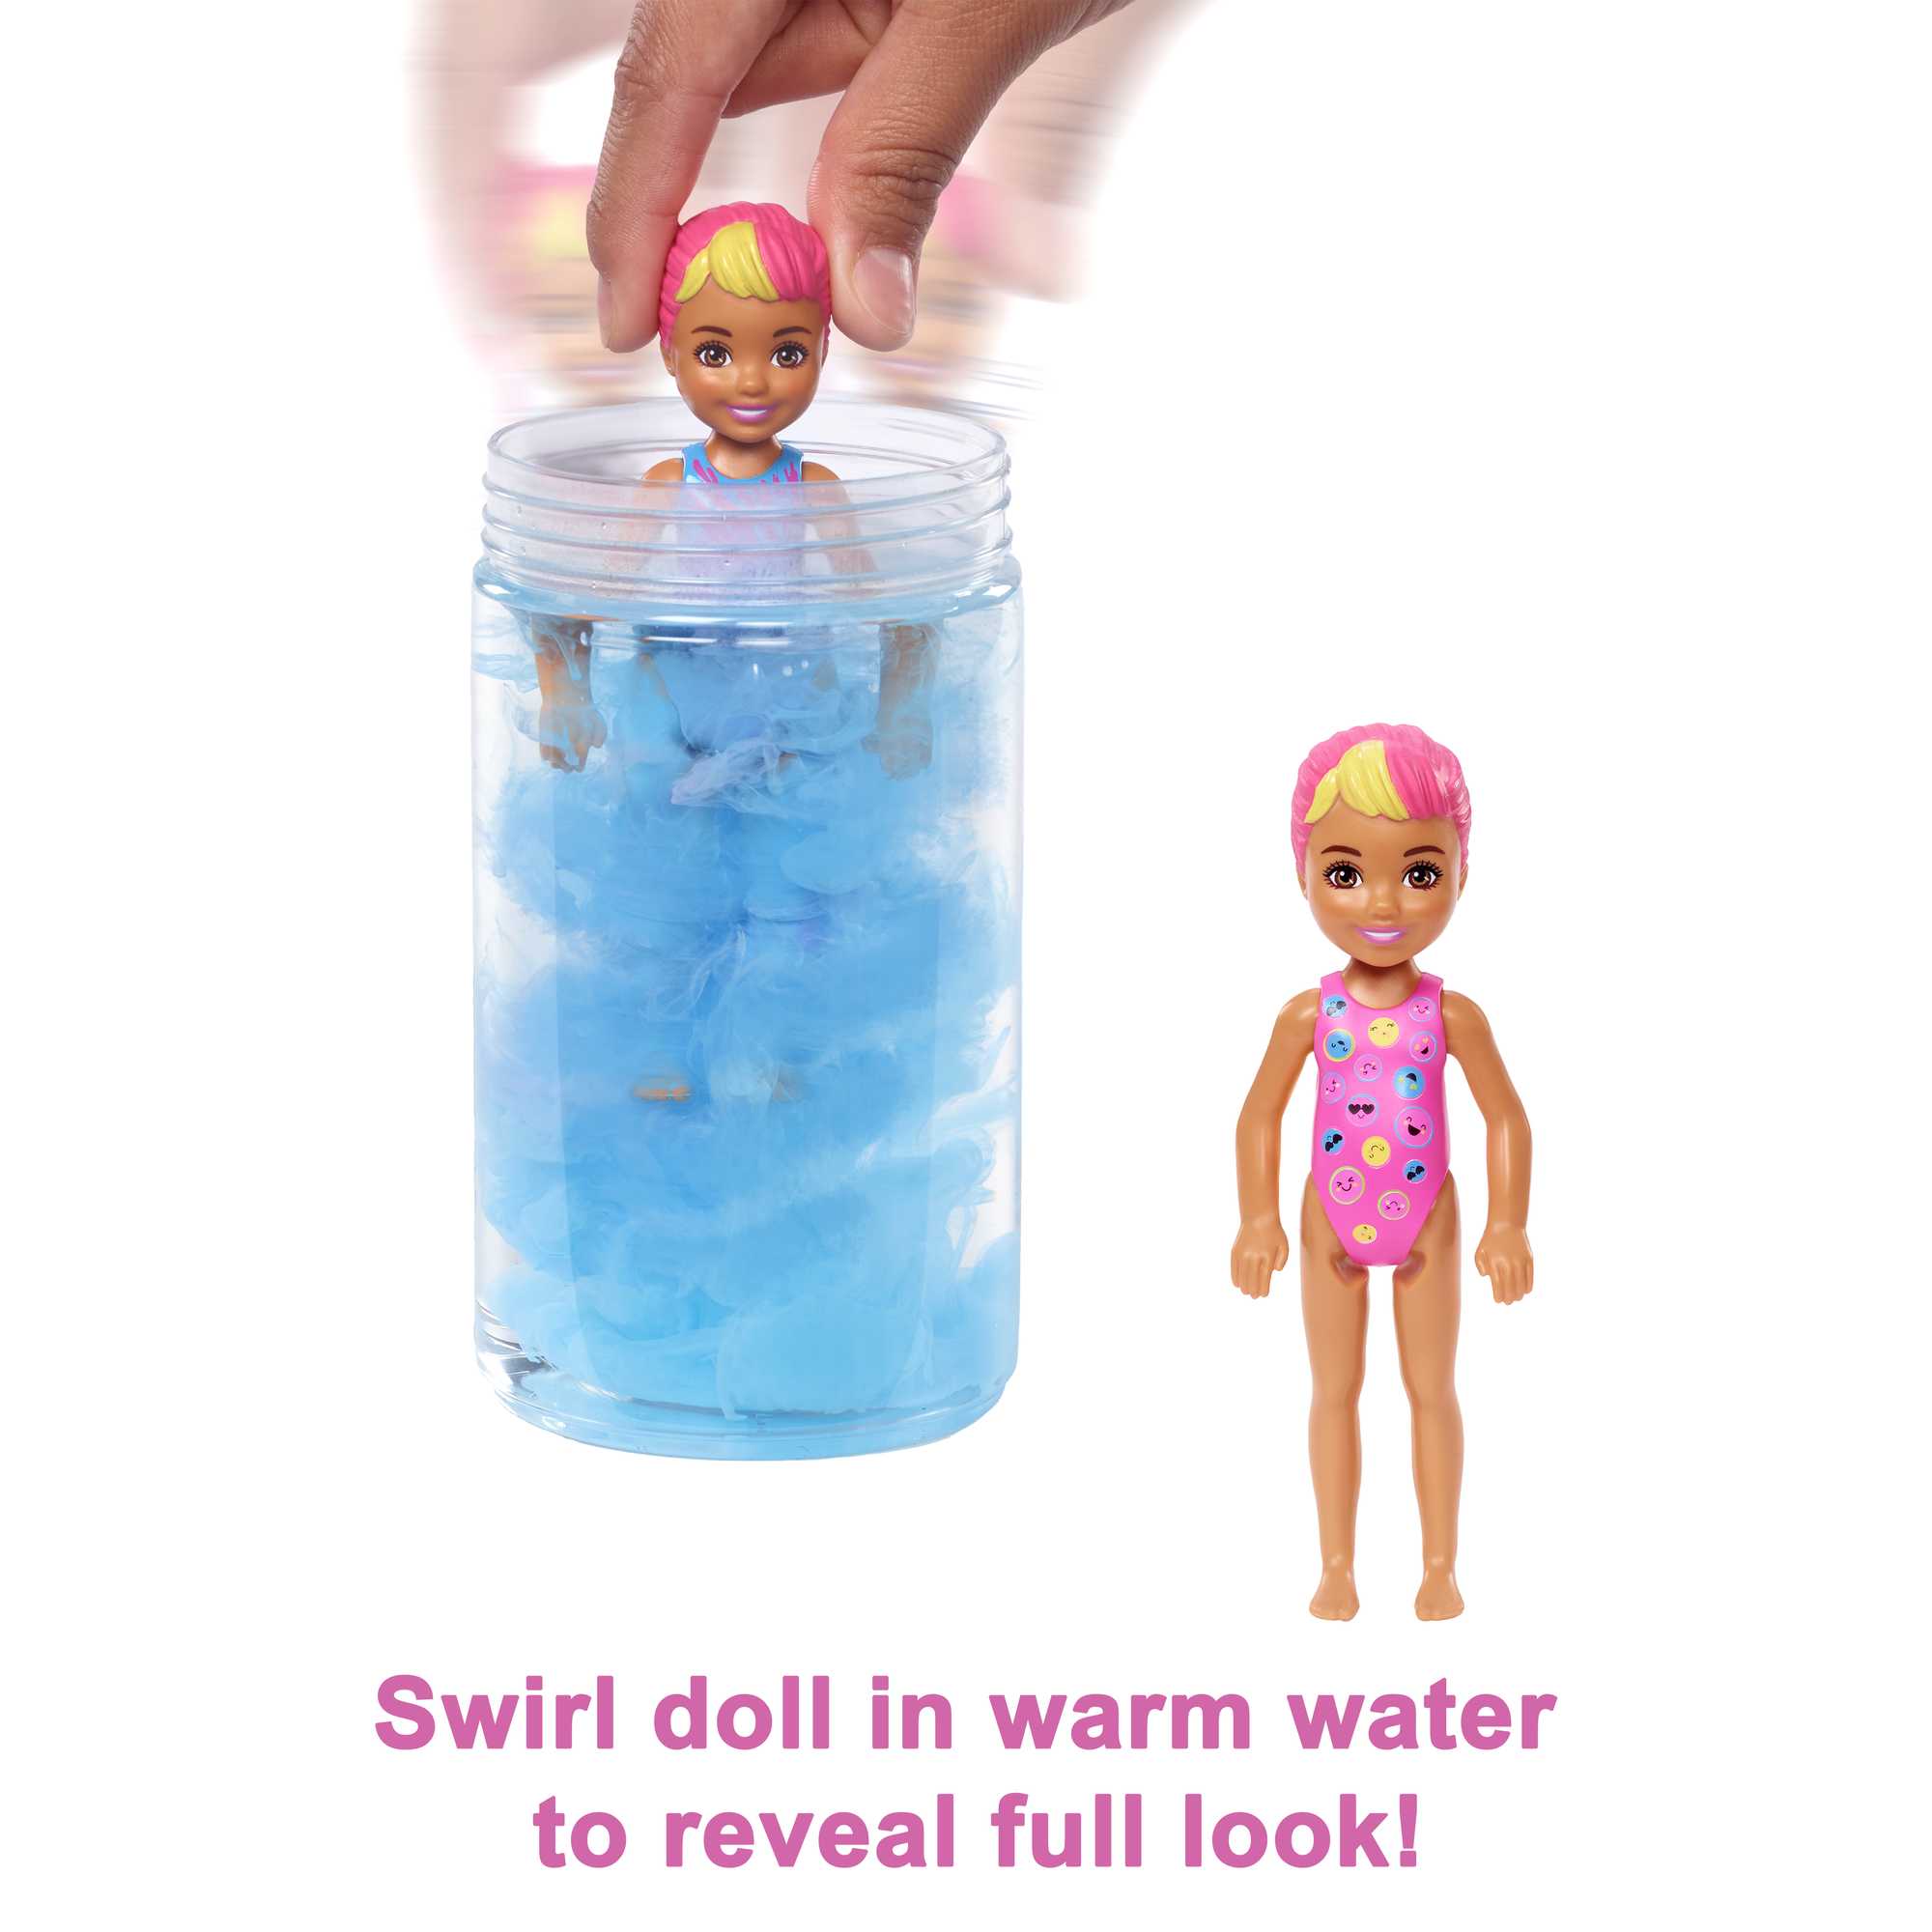 Mattel Barbie Chelsea Color Reveal Doll Sortimento